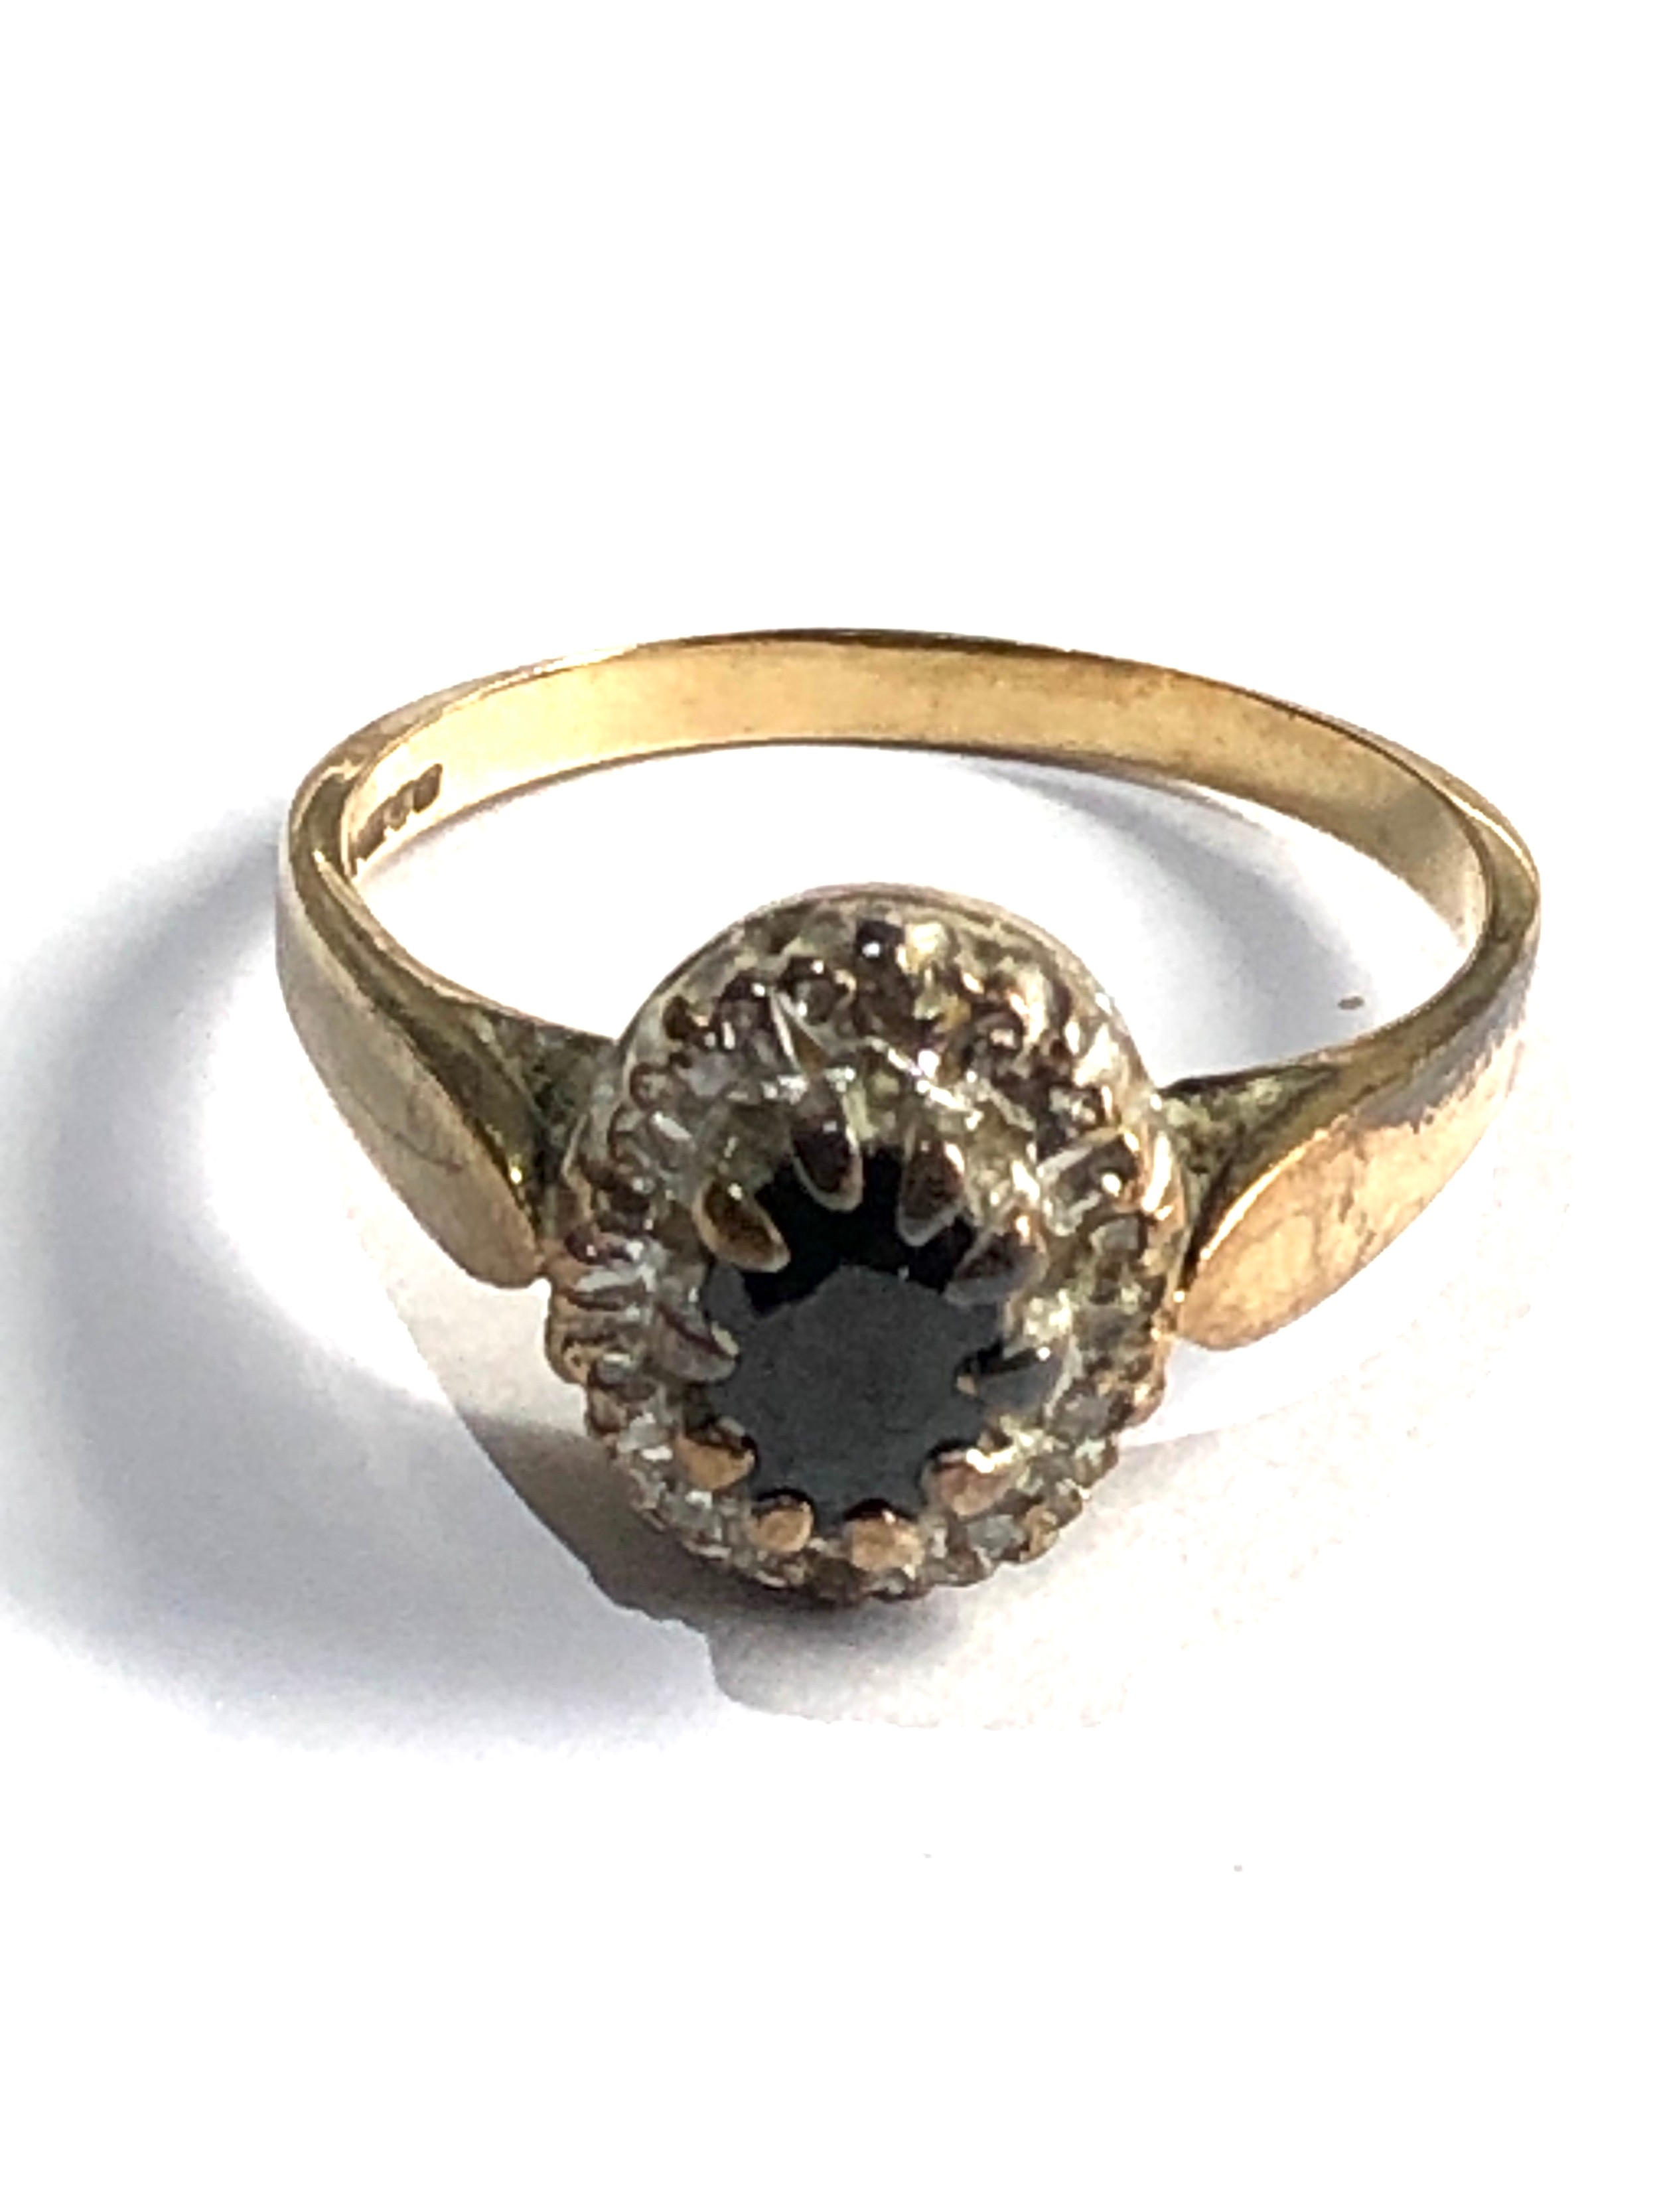 9ct gold sapphire & diamond ring weight 2.7g